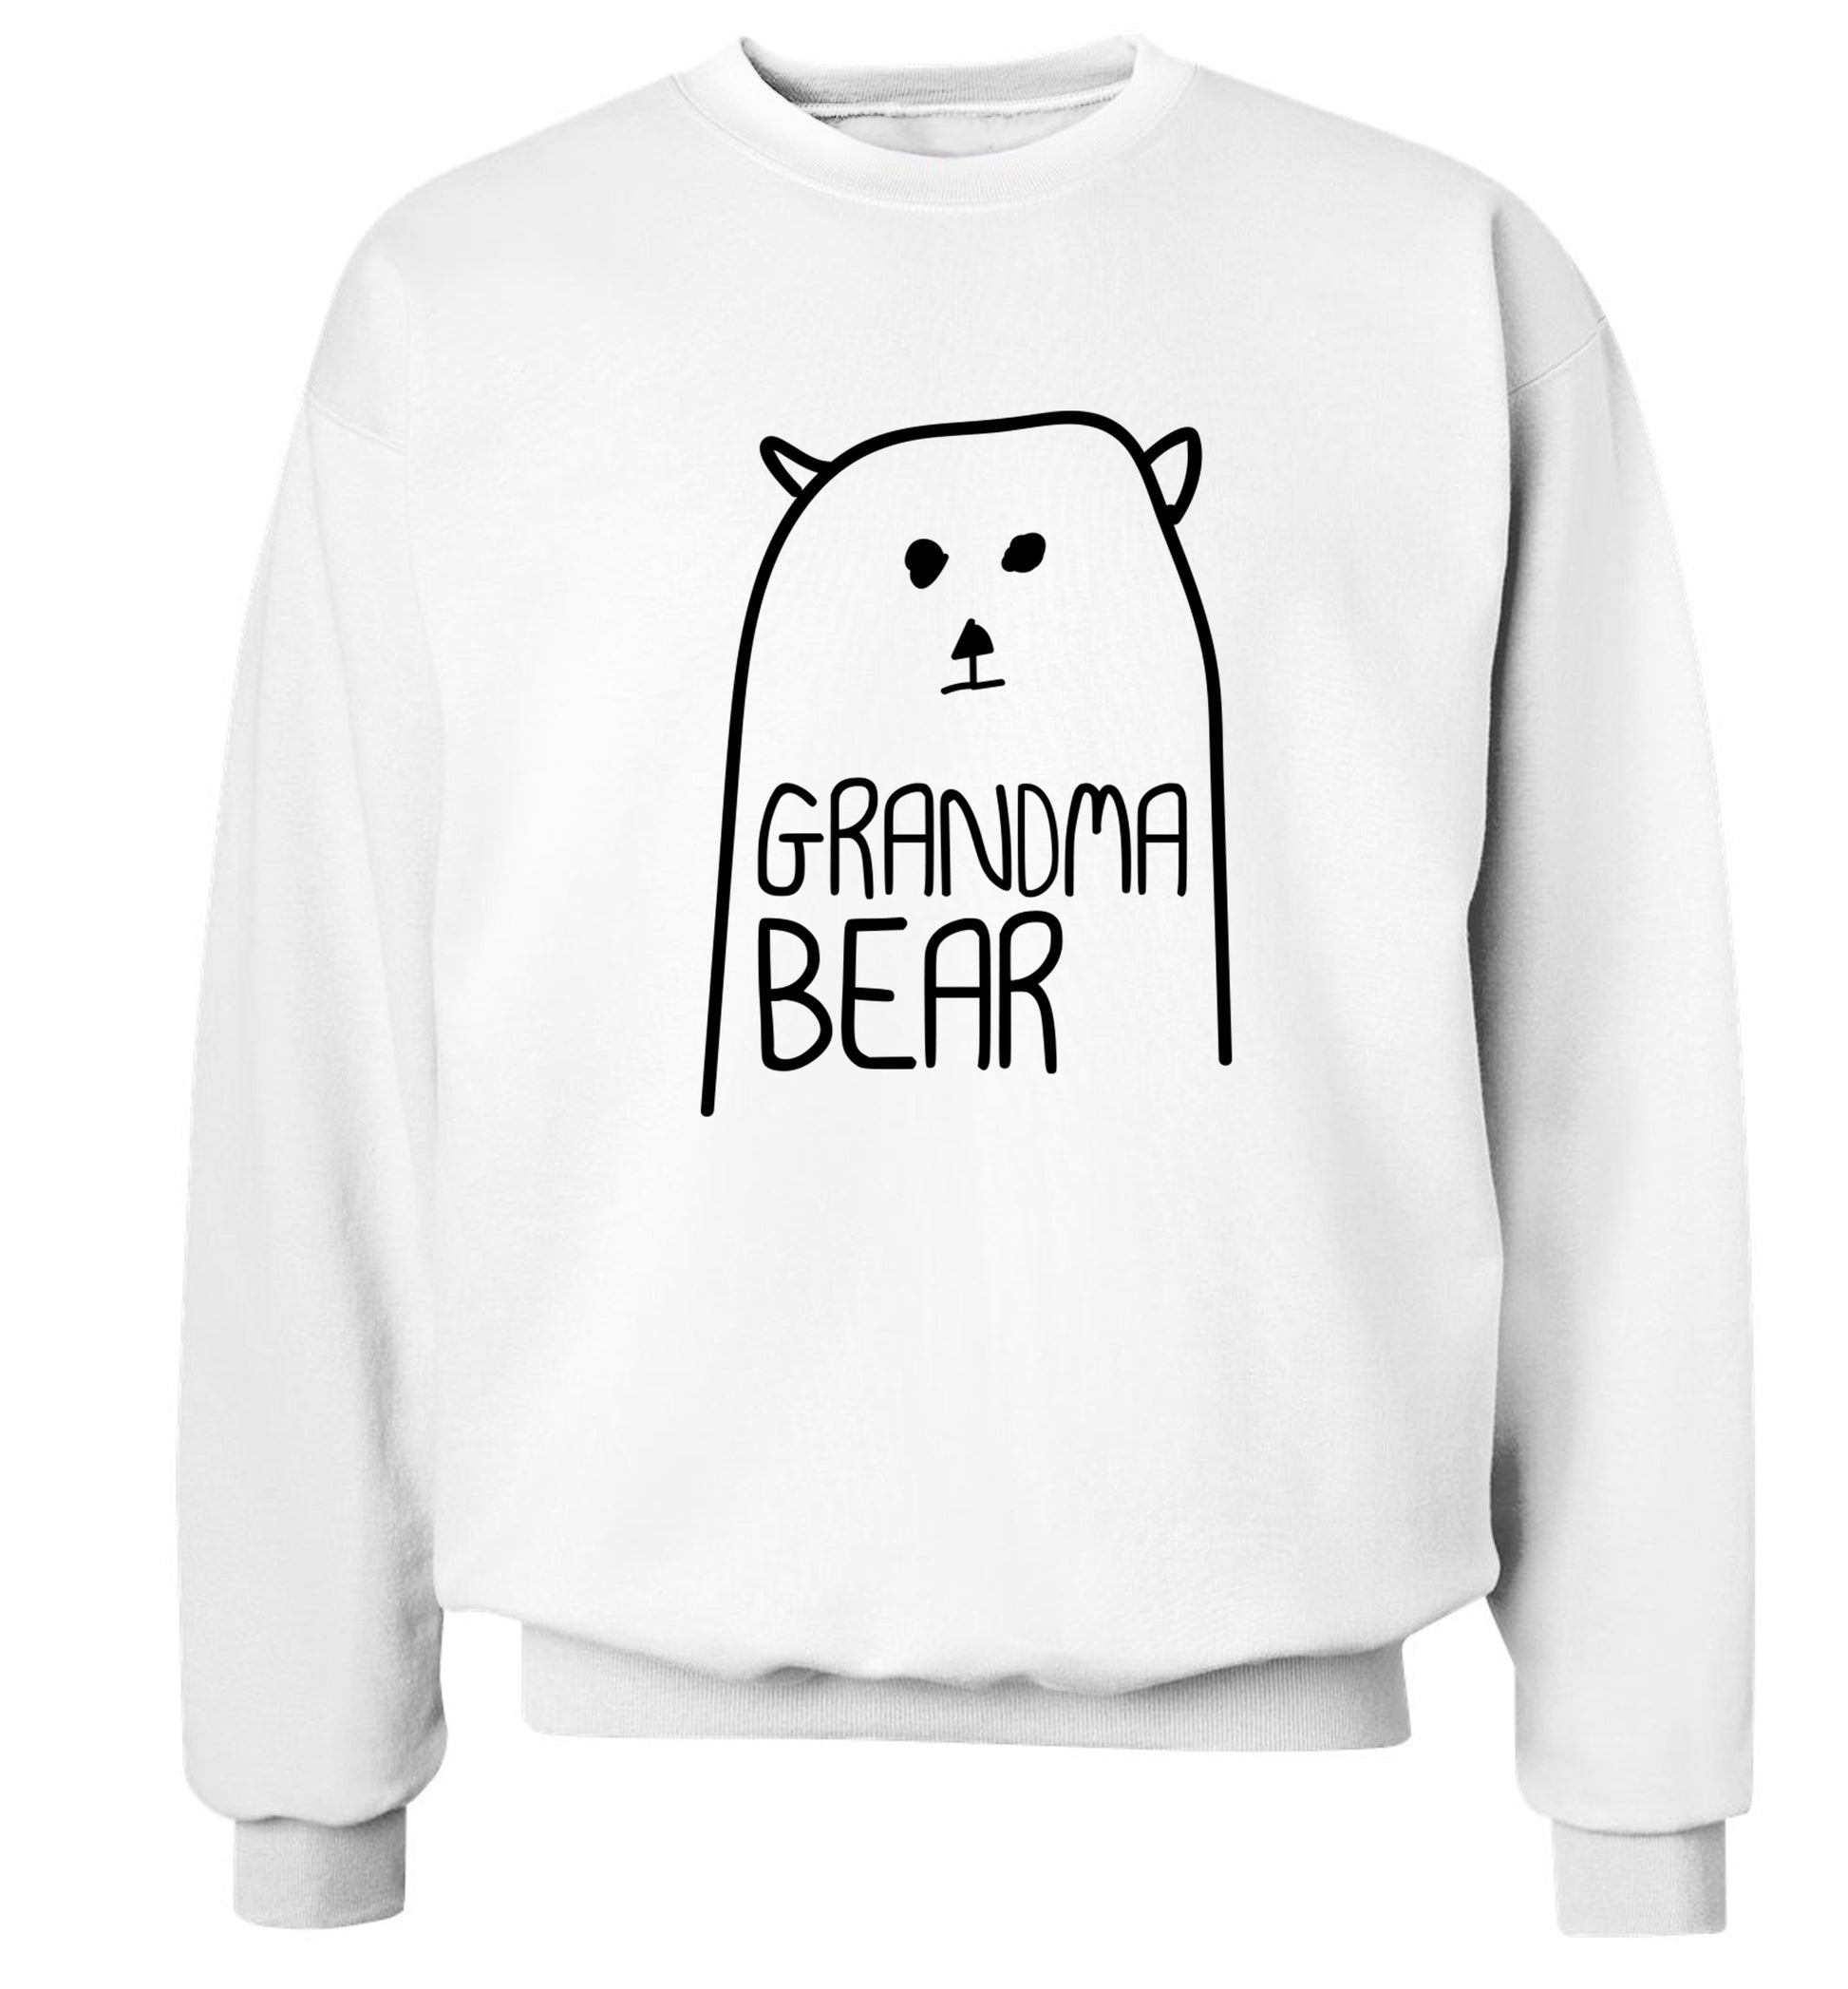 Grandma bear Adult's unisex white Sweater 2XL